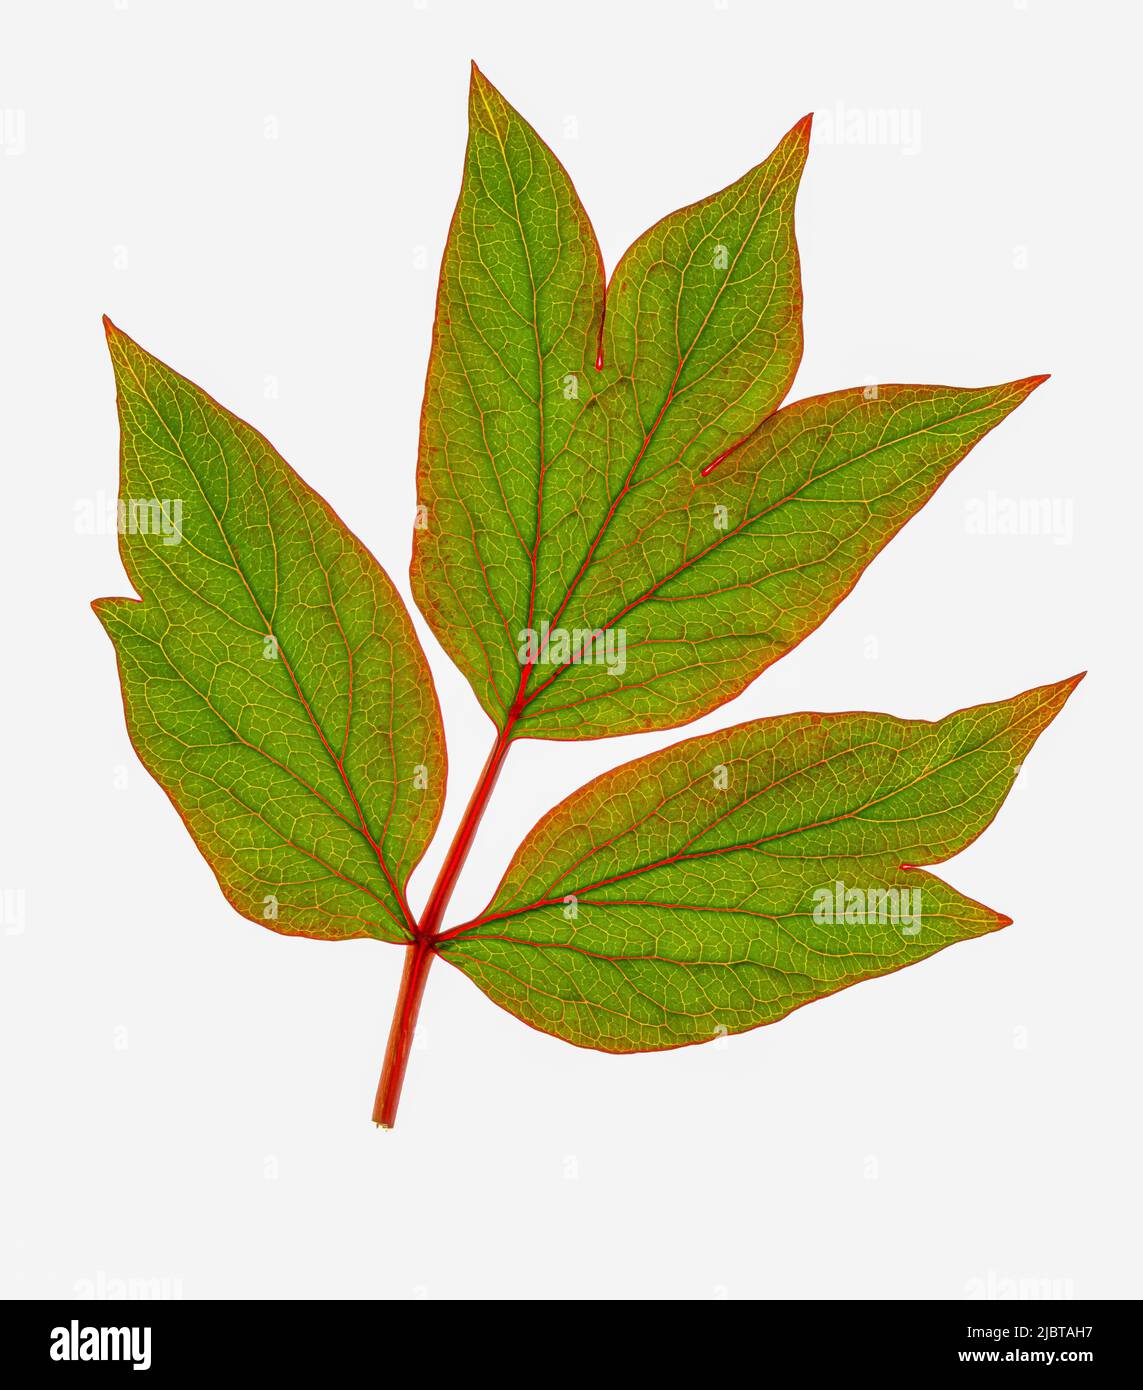 Tree peony leaf (Paeonia suffruticosa) Stock Photo